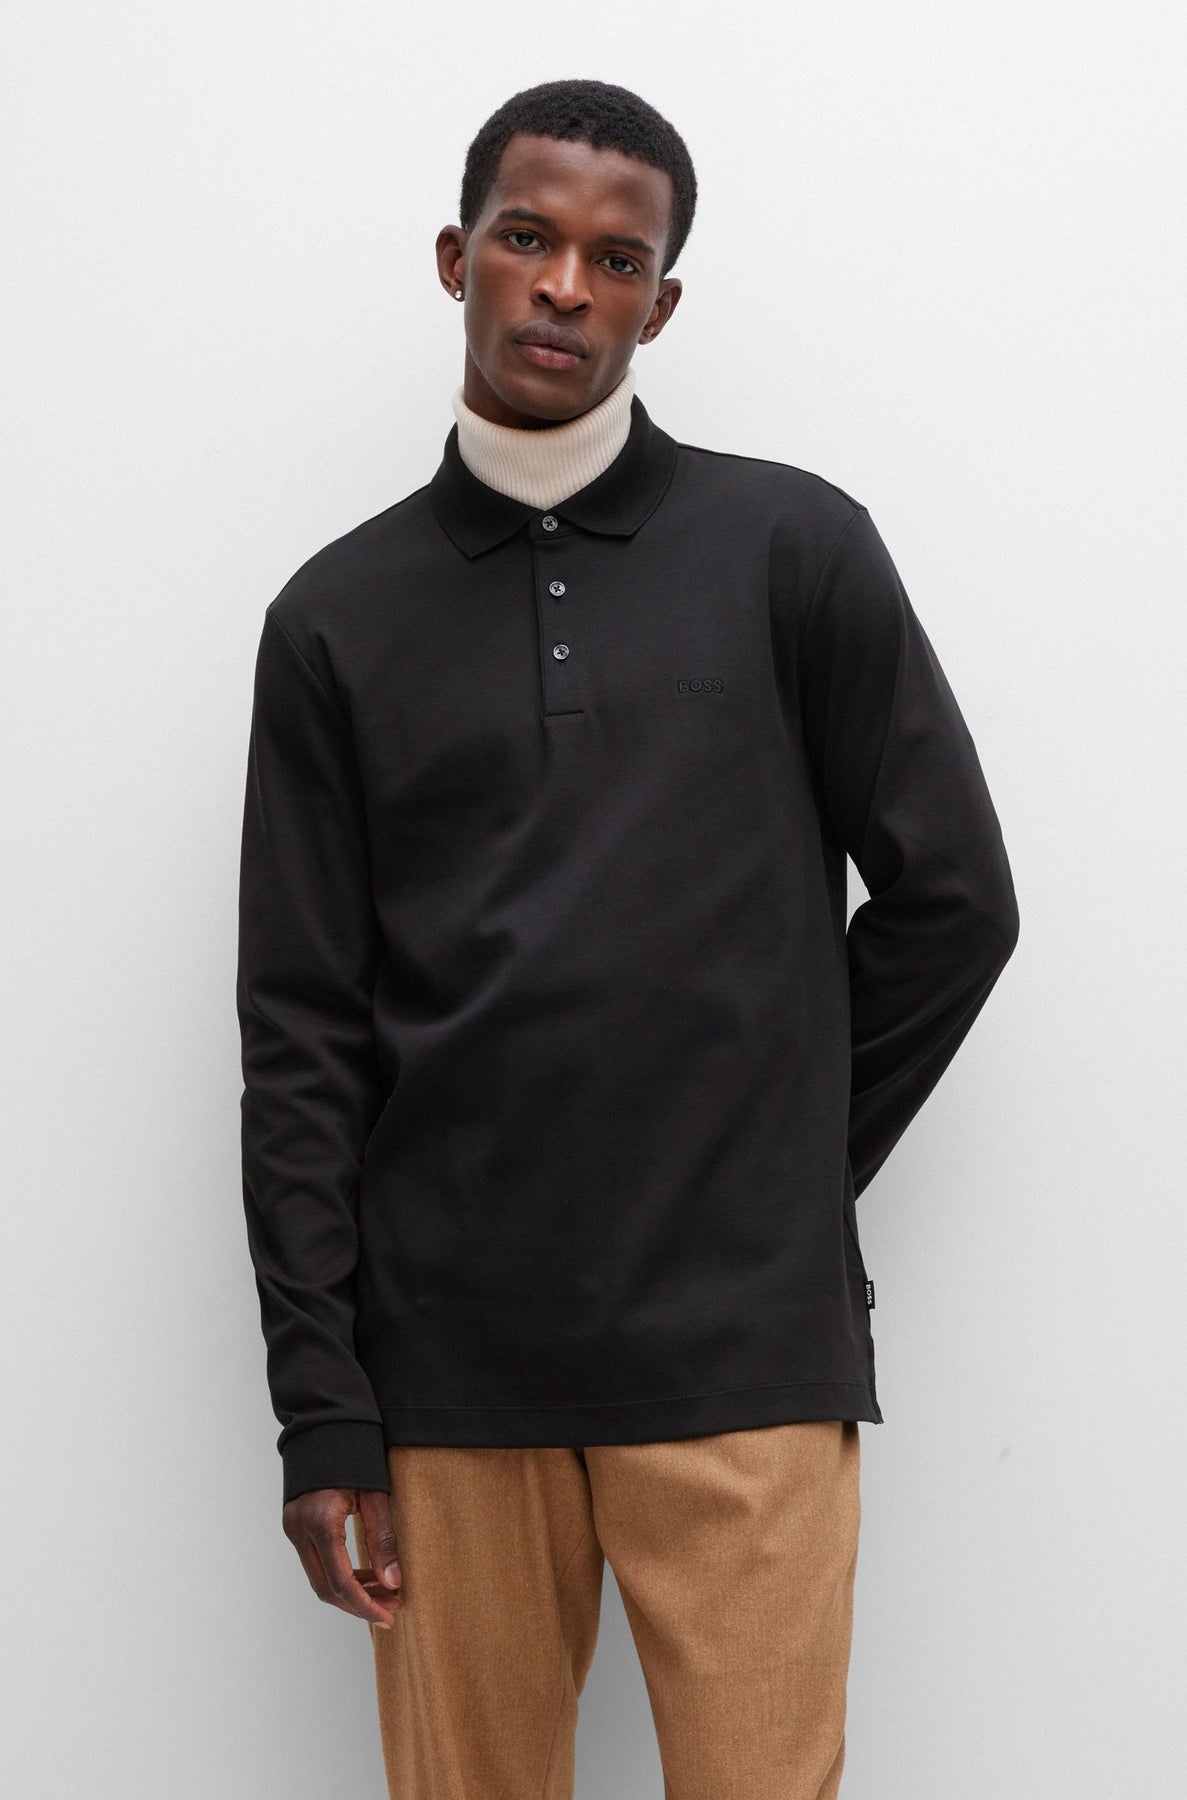 BOSS Pado 30 Long Sleeve Polo Shirt in Black | BOSS | Norton Barrie